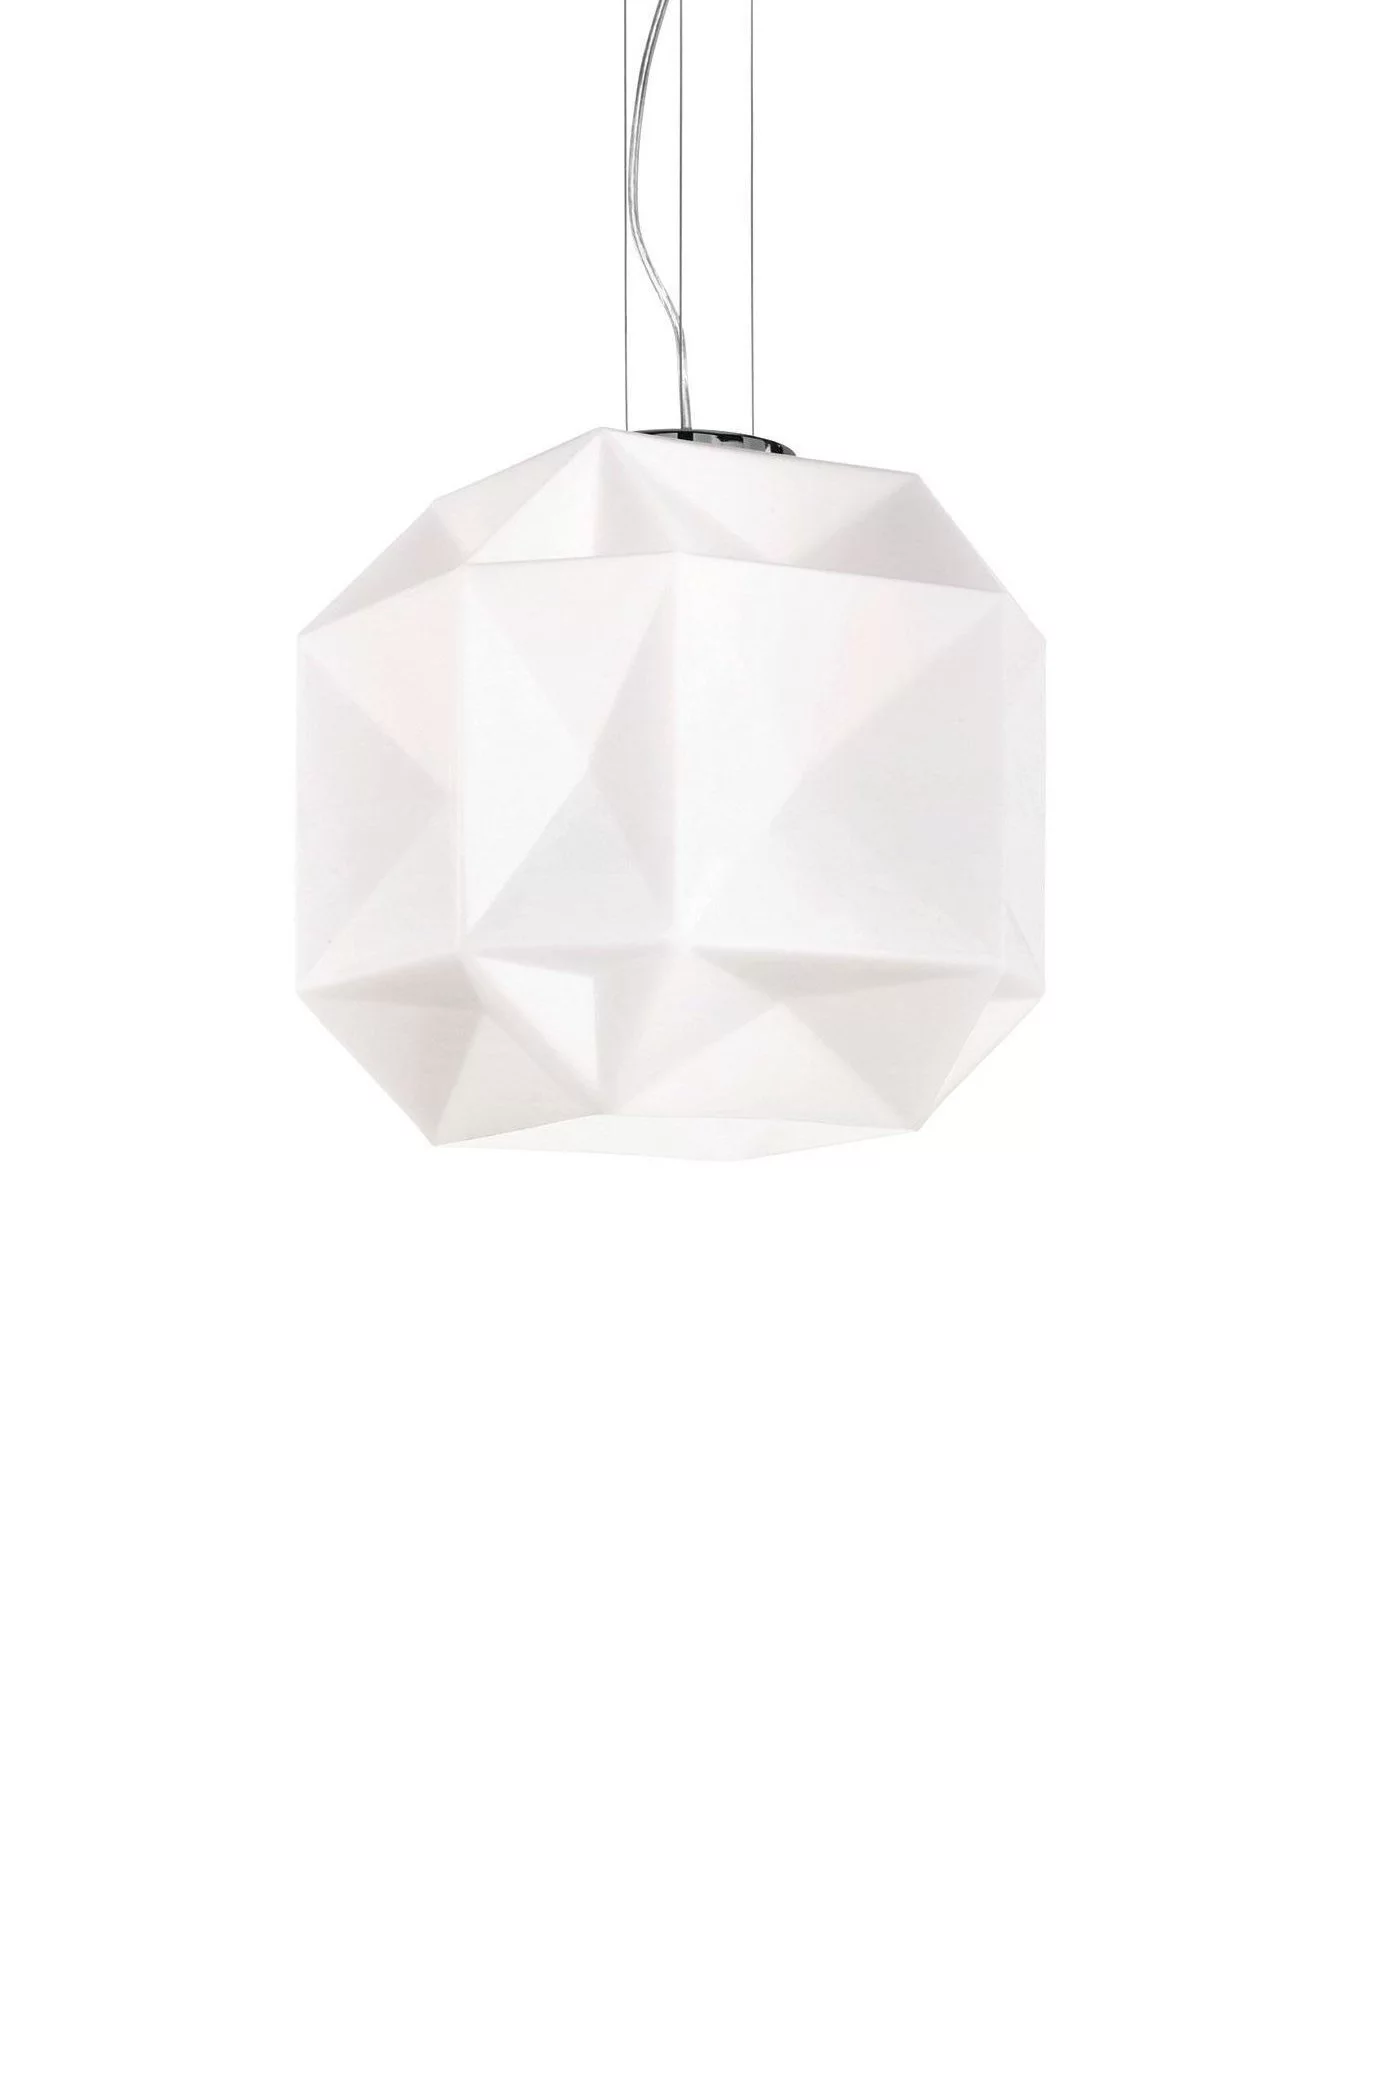   
                        
                        Люстра IDEAL LUX (Италия) 81165    
                         в стиле Модерн.  
                        Тип источника света: светодиодная лампа, сменная.                         Форма: Квадрат.                         Цвета плафонов и подвесок: Белый.                         Материал: Стекло.                          фото 1